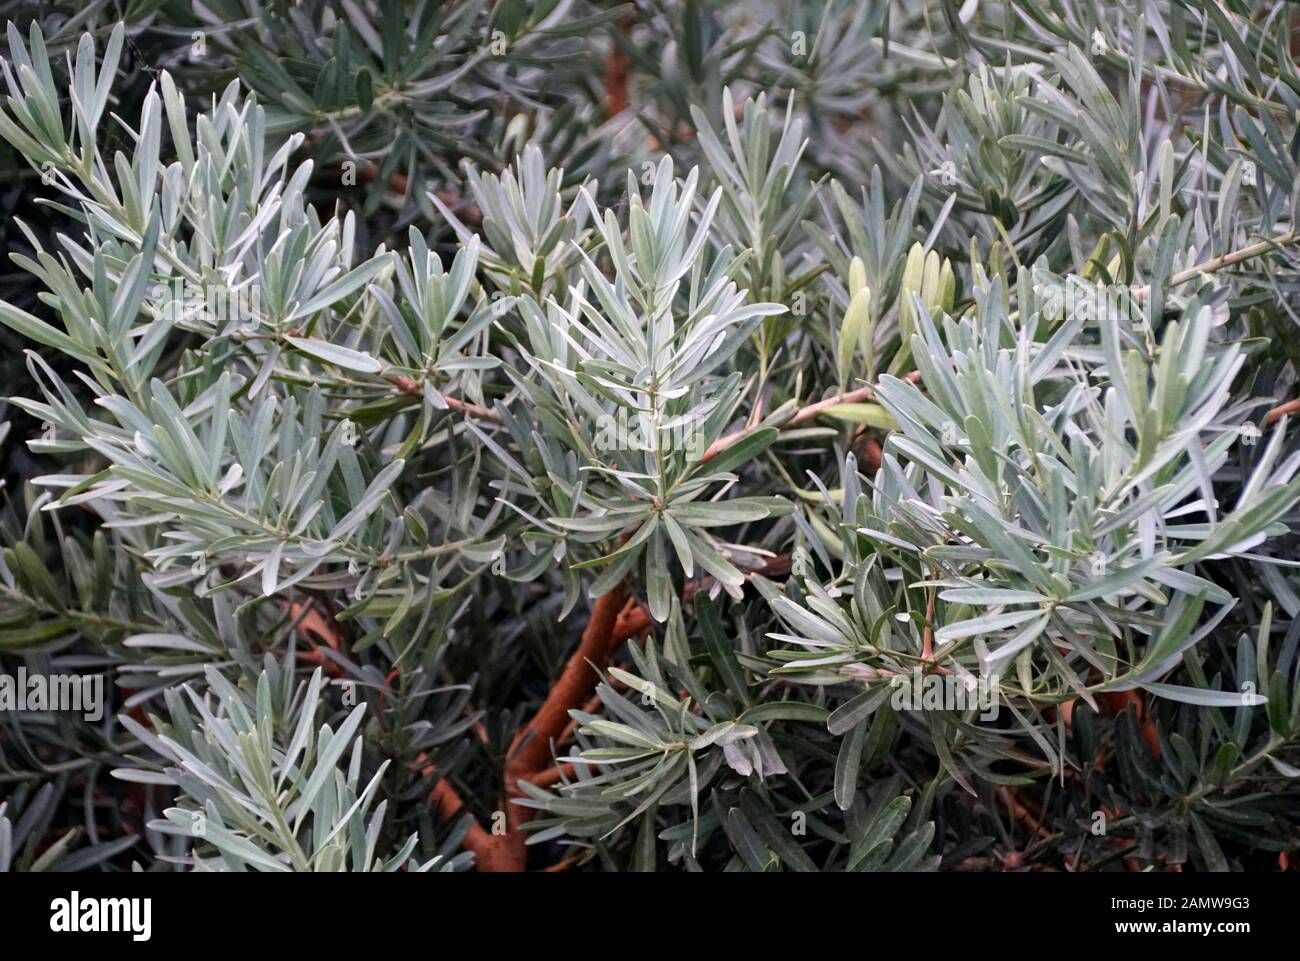 Blue Ice Yellowwood plant, also known as Podocarpus elongatus 'Monmal' Stock Photo